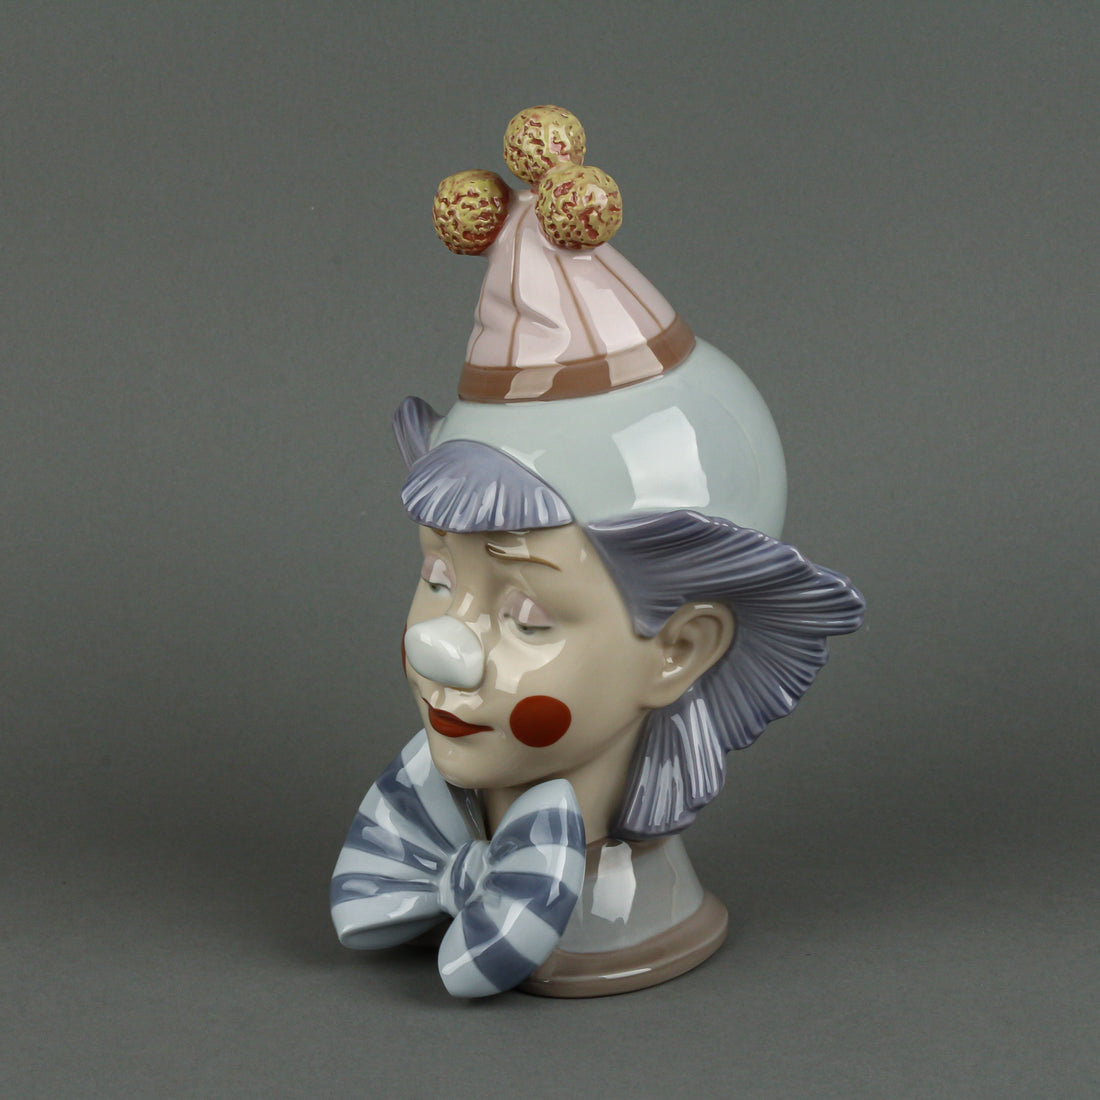 LLADRO Reflecting 5612 - Clown Figurine